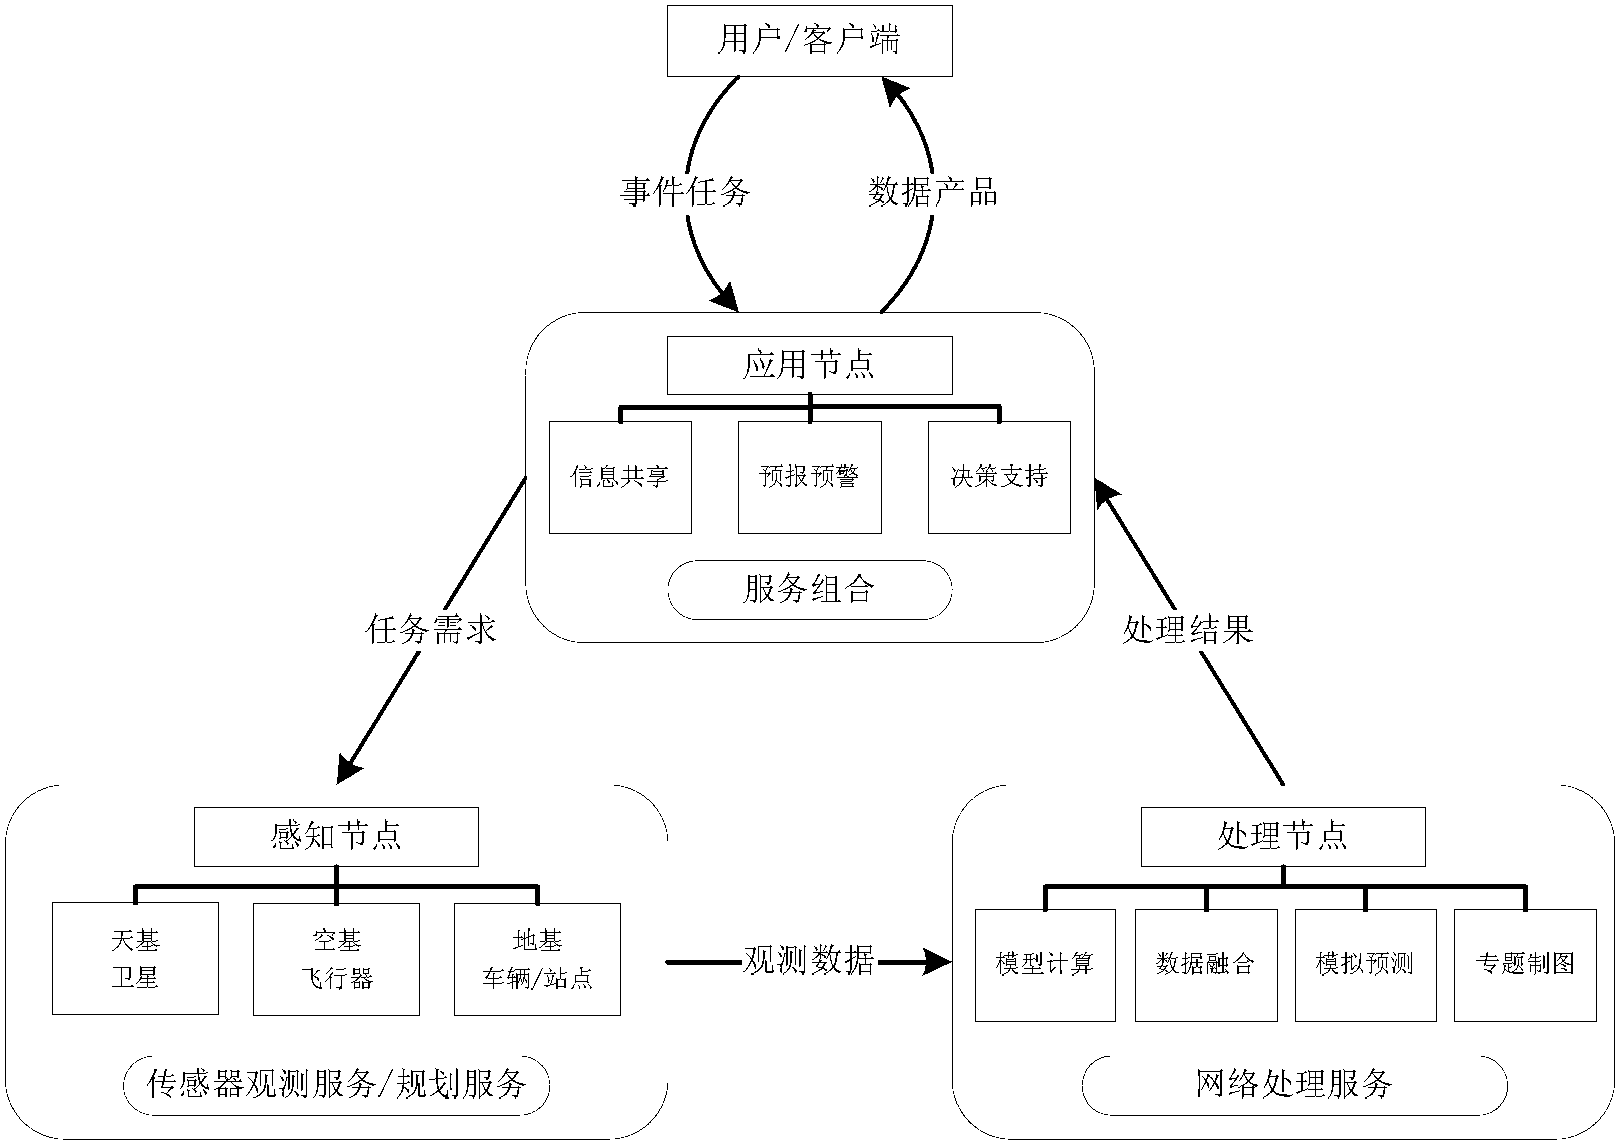 Construction method of sensor network heterogeneous node element model